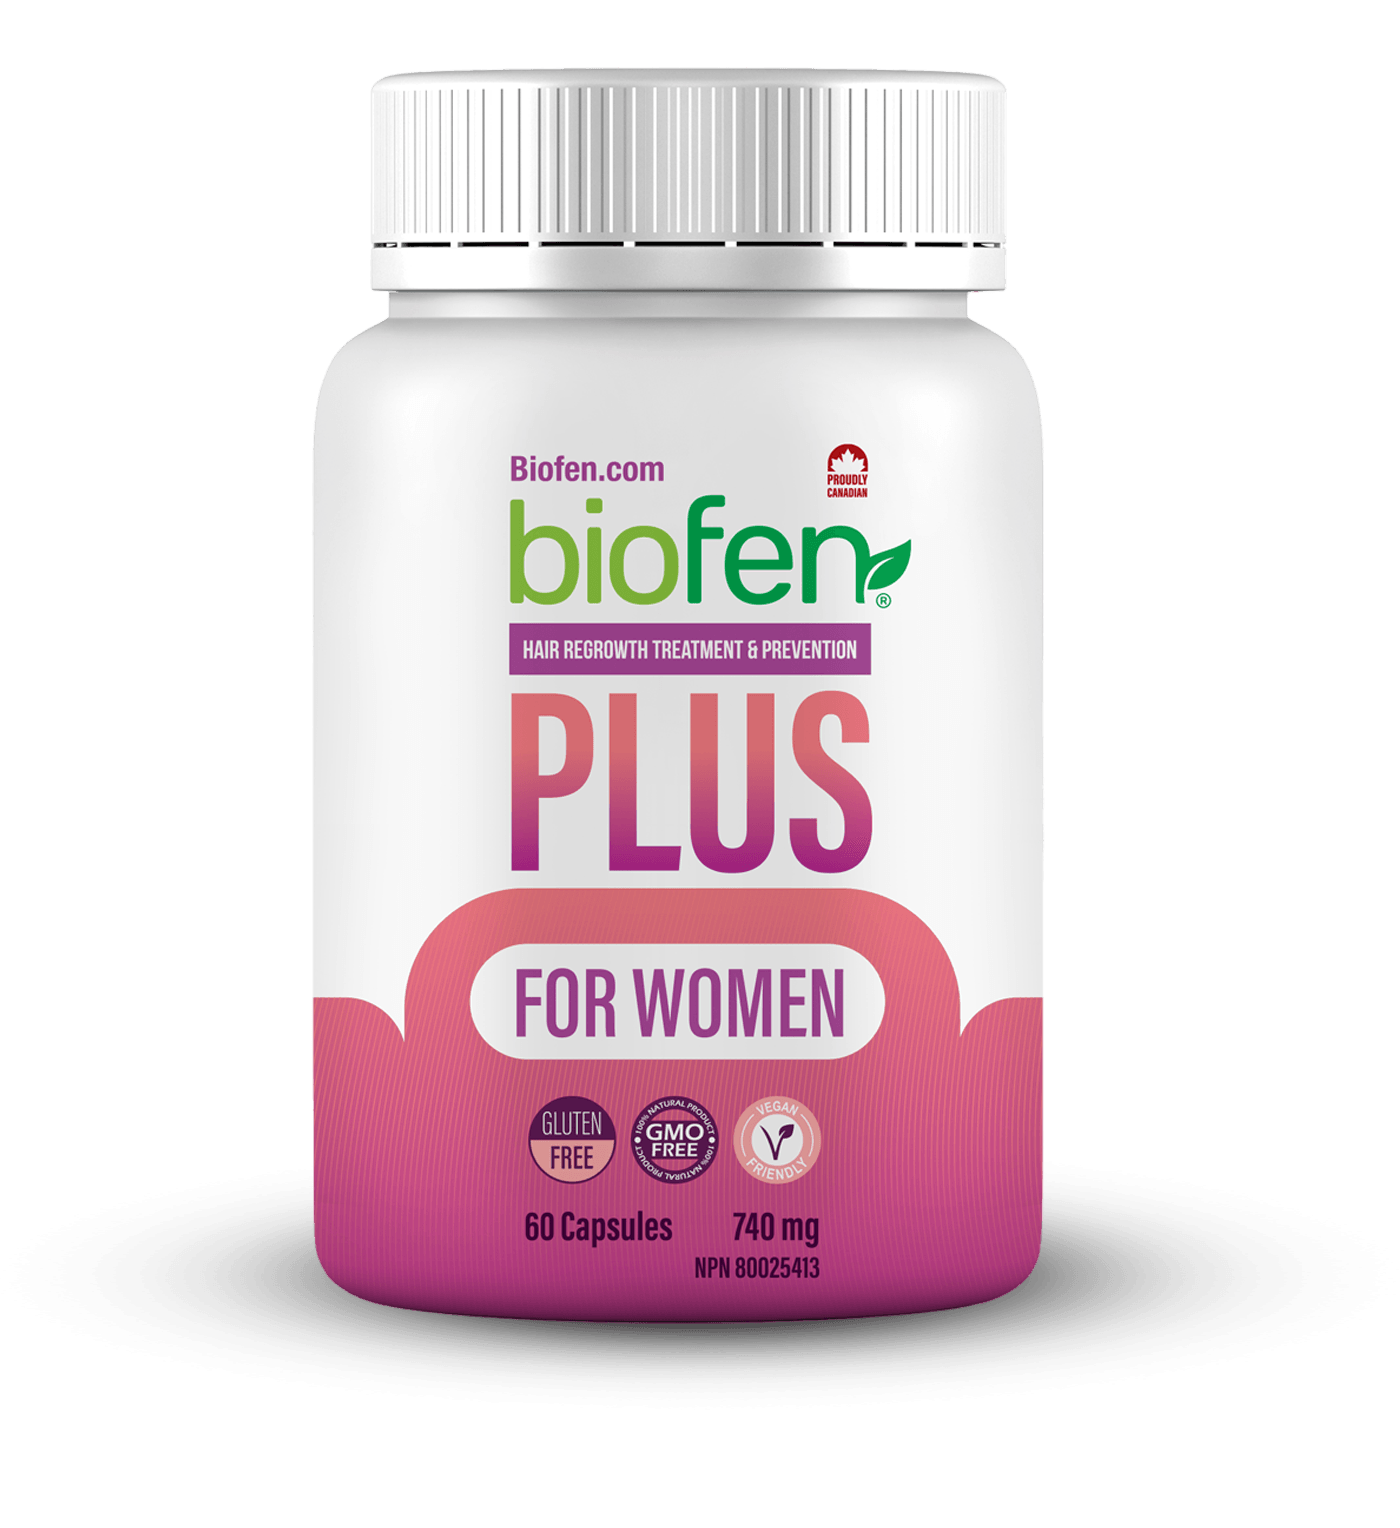 Bio-Fen Plus Products Online